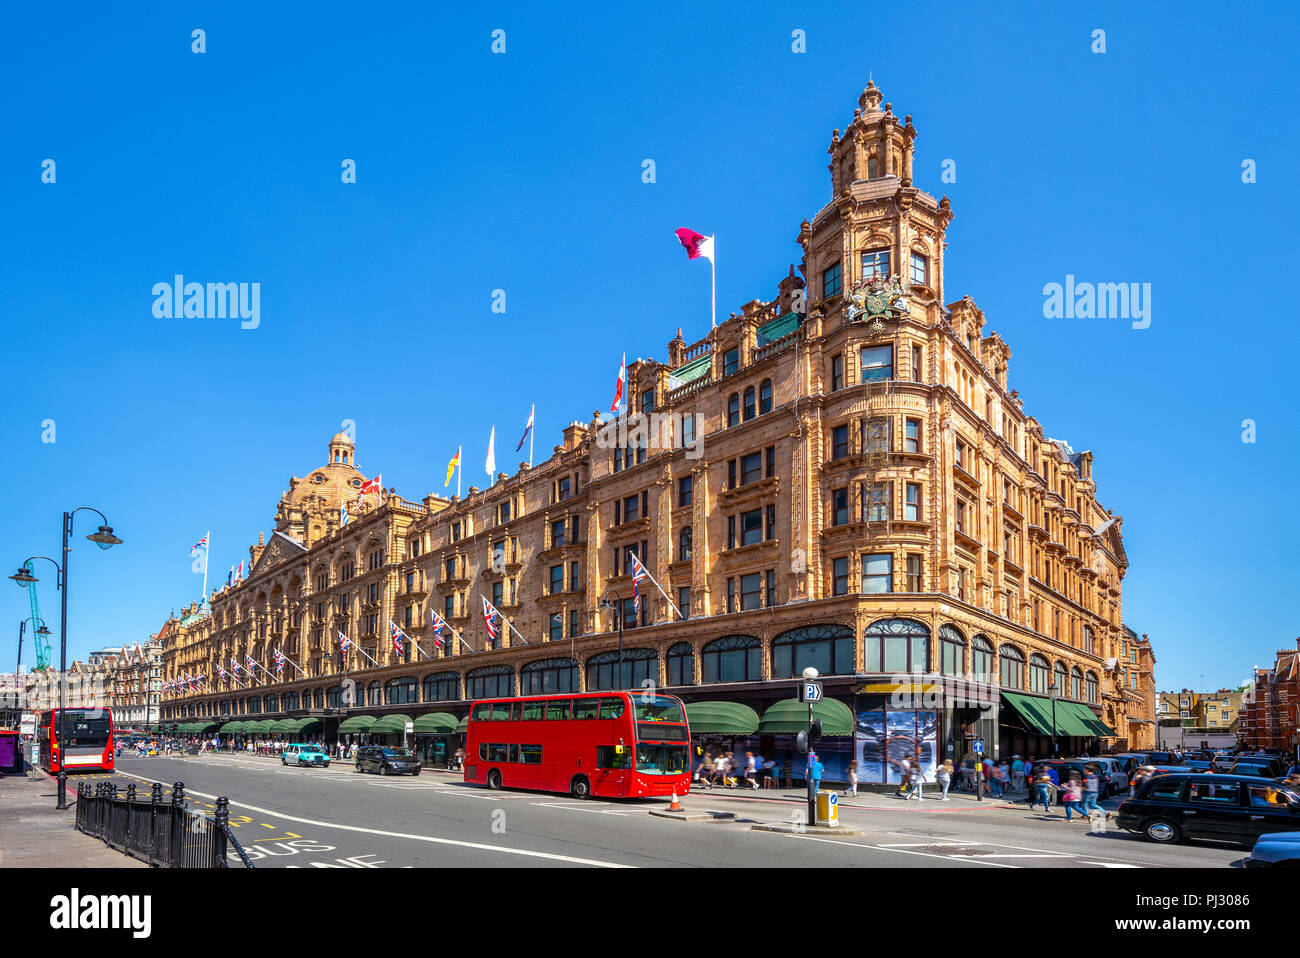 Vista de la calle de Londres con famosos grandes almacenes Foto de stock